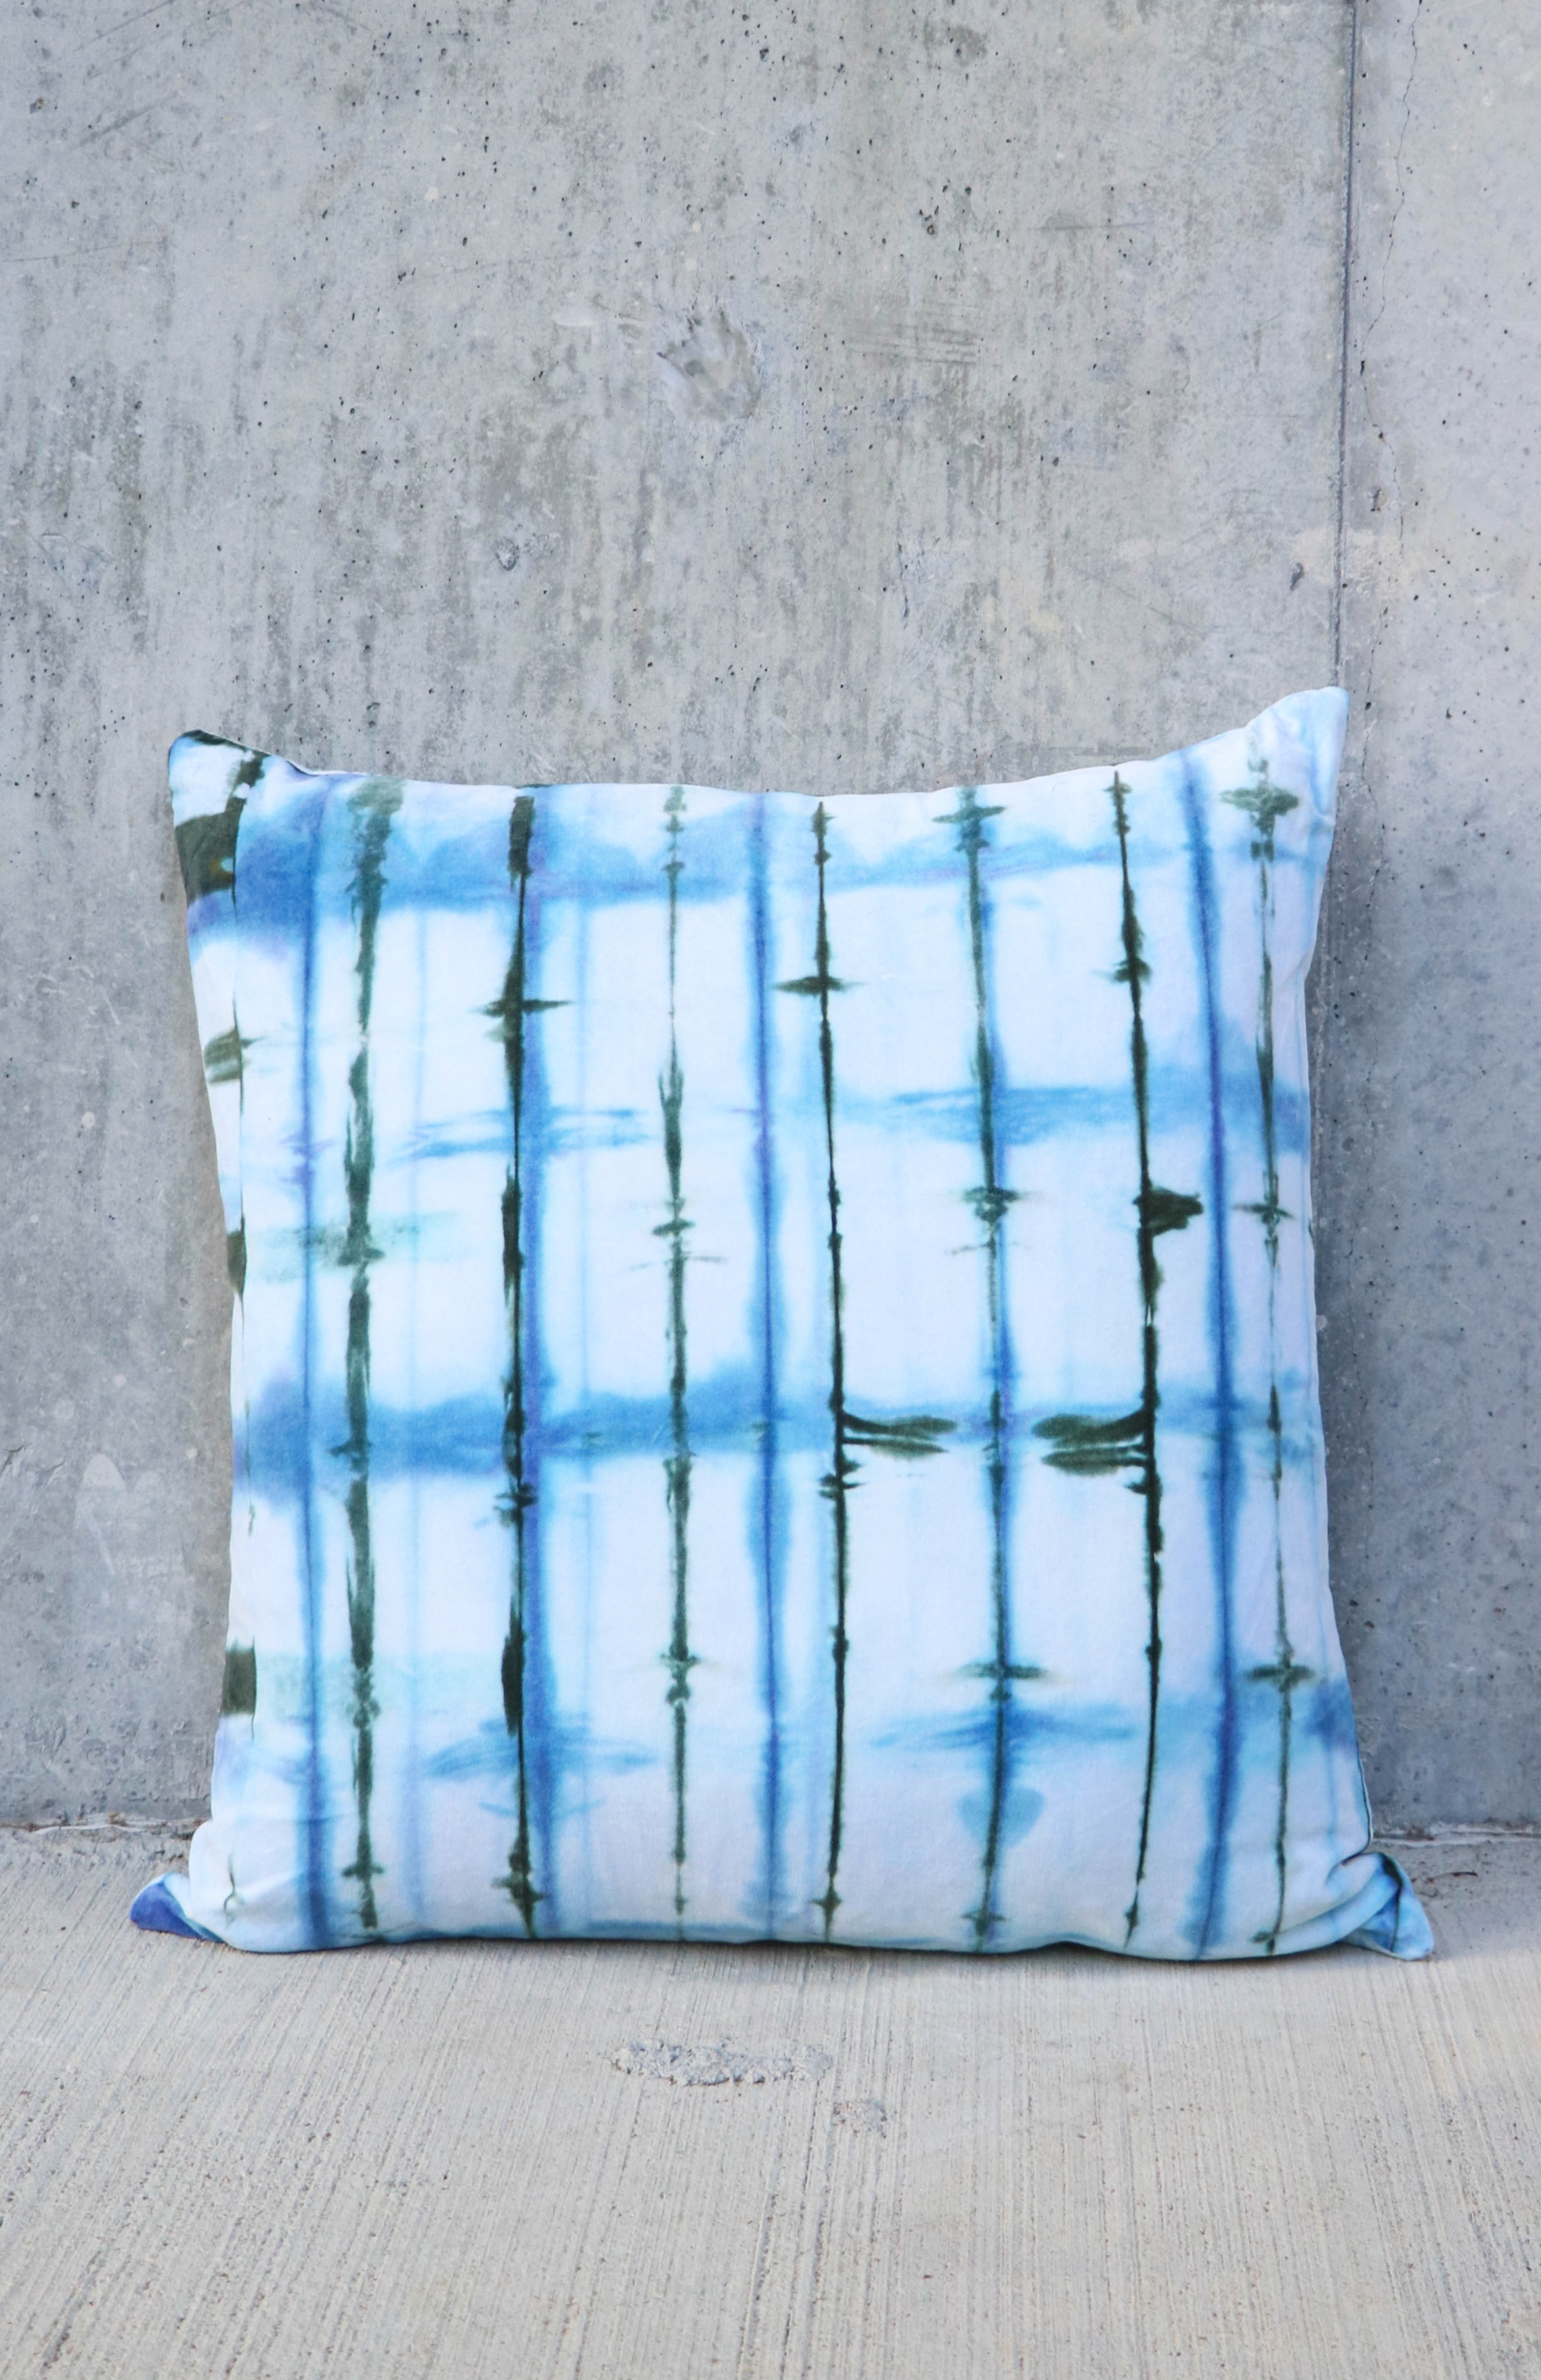 Hand-Dyed Shibori Pillow in Cotton Velvet